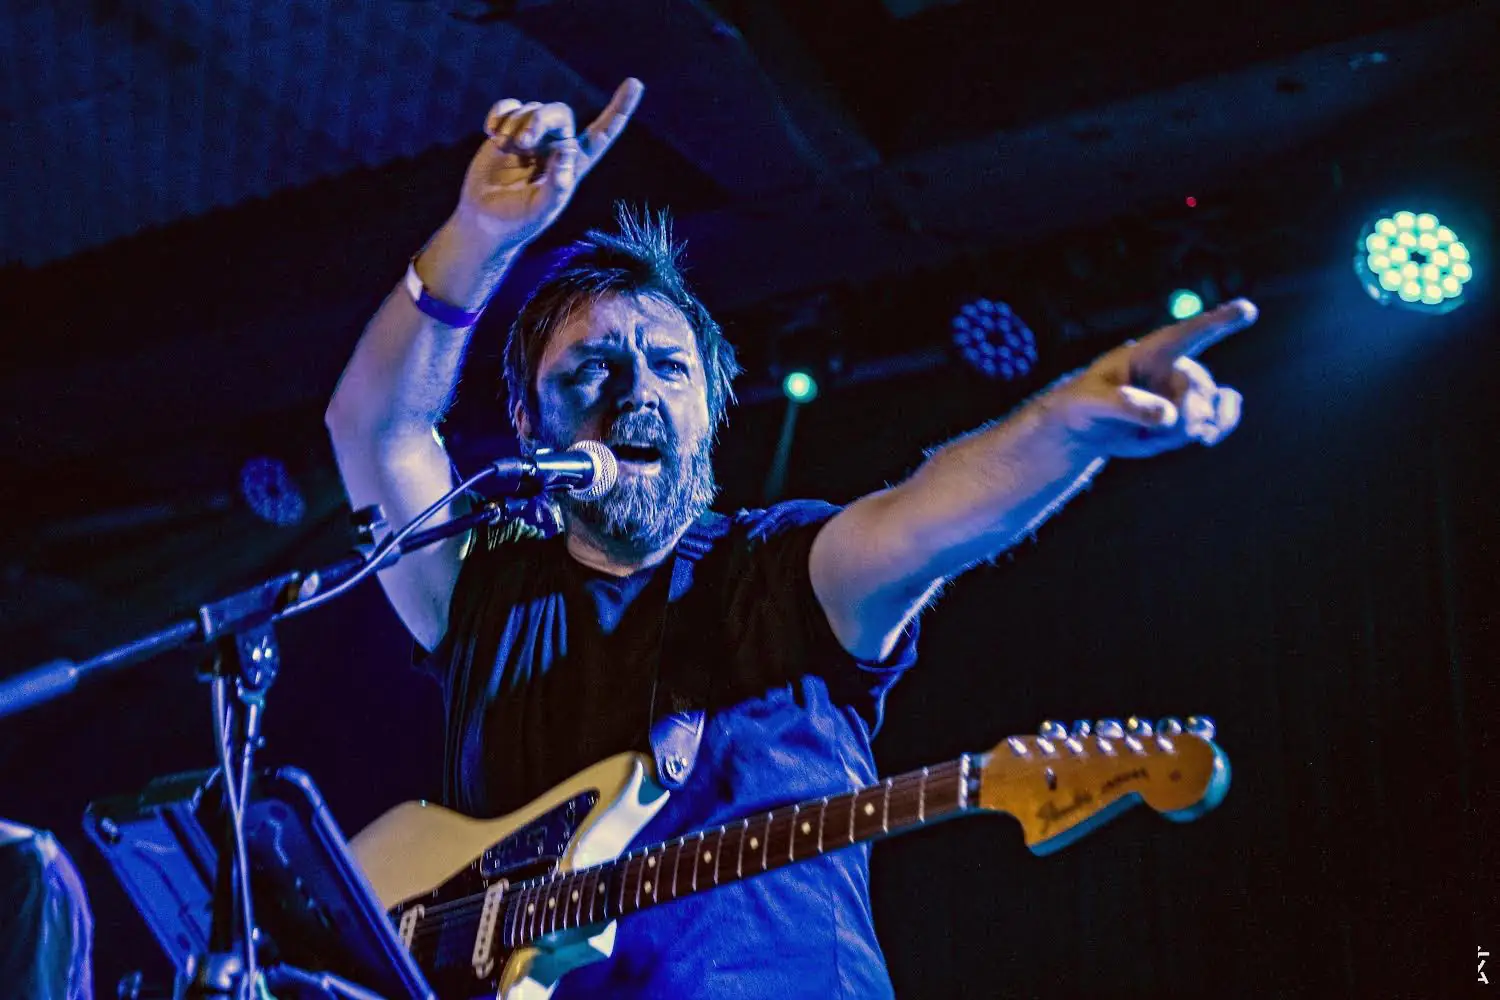 Paul Draper on Live Shows Marking the 25th Anniversary of Mansun’s Iconic ‘Six’ Album